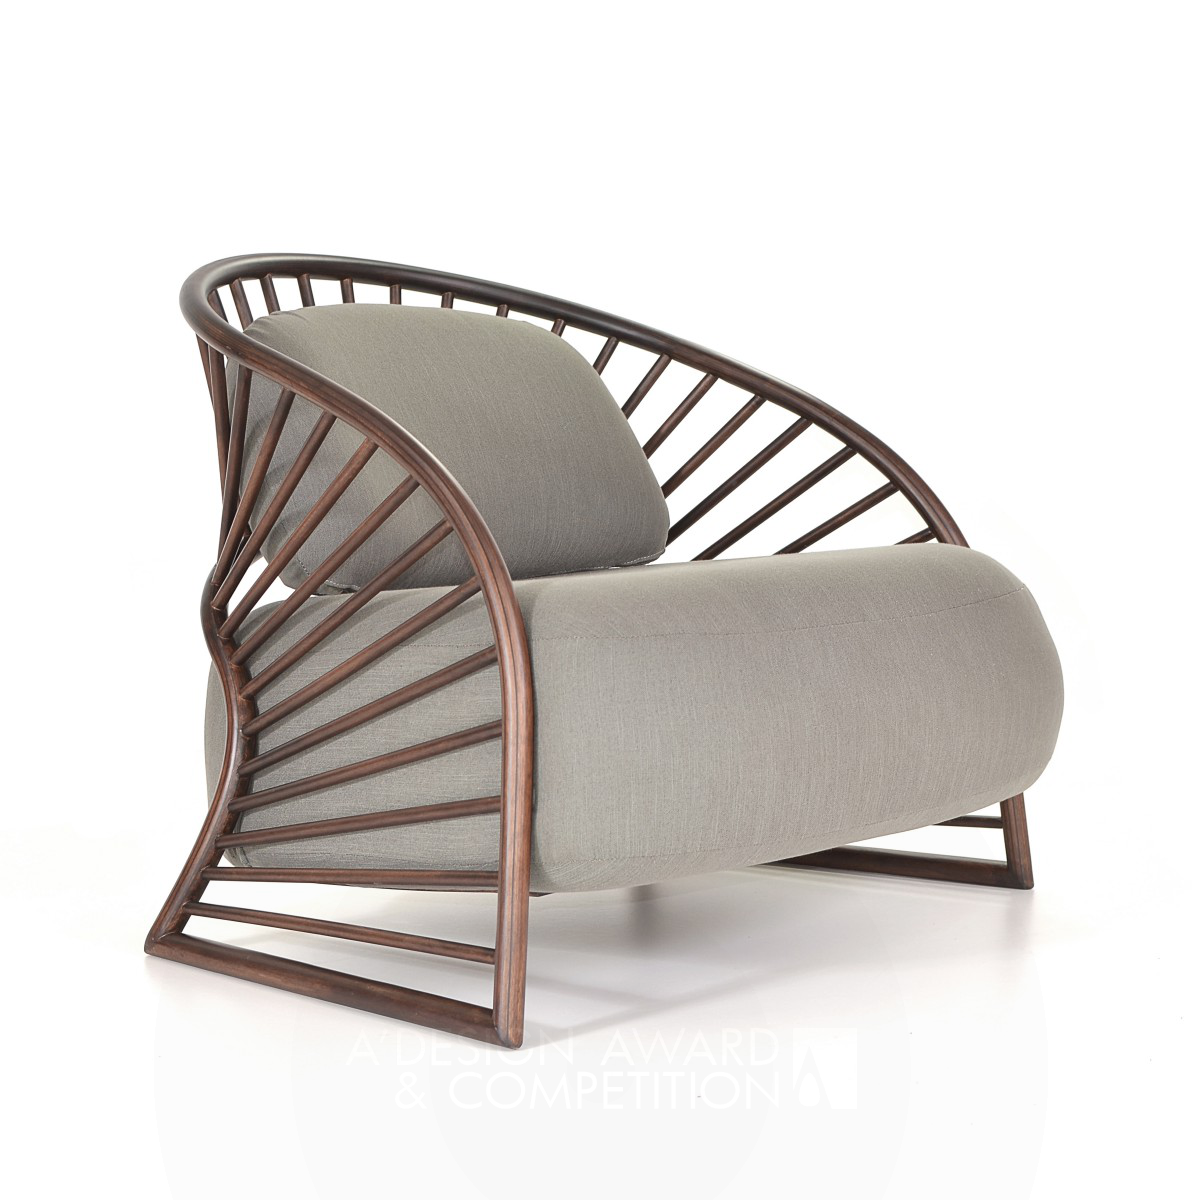 Lattoog wins Silver at the prestigious A' Furniture Design Award with Luar Armchair.